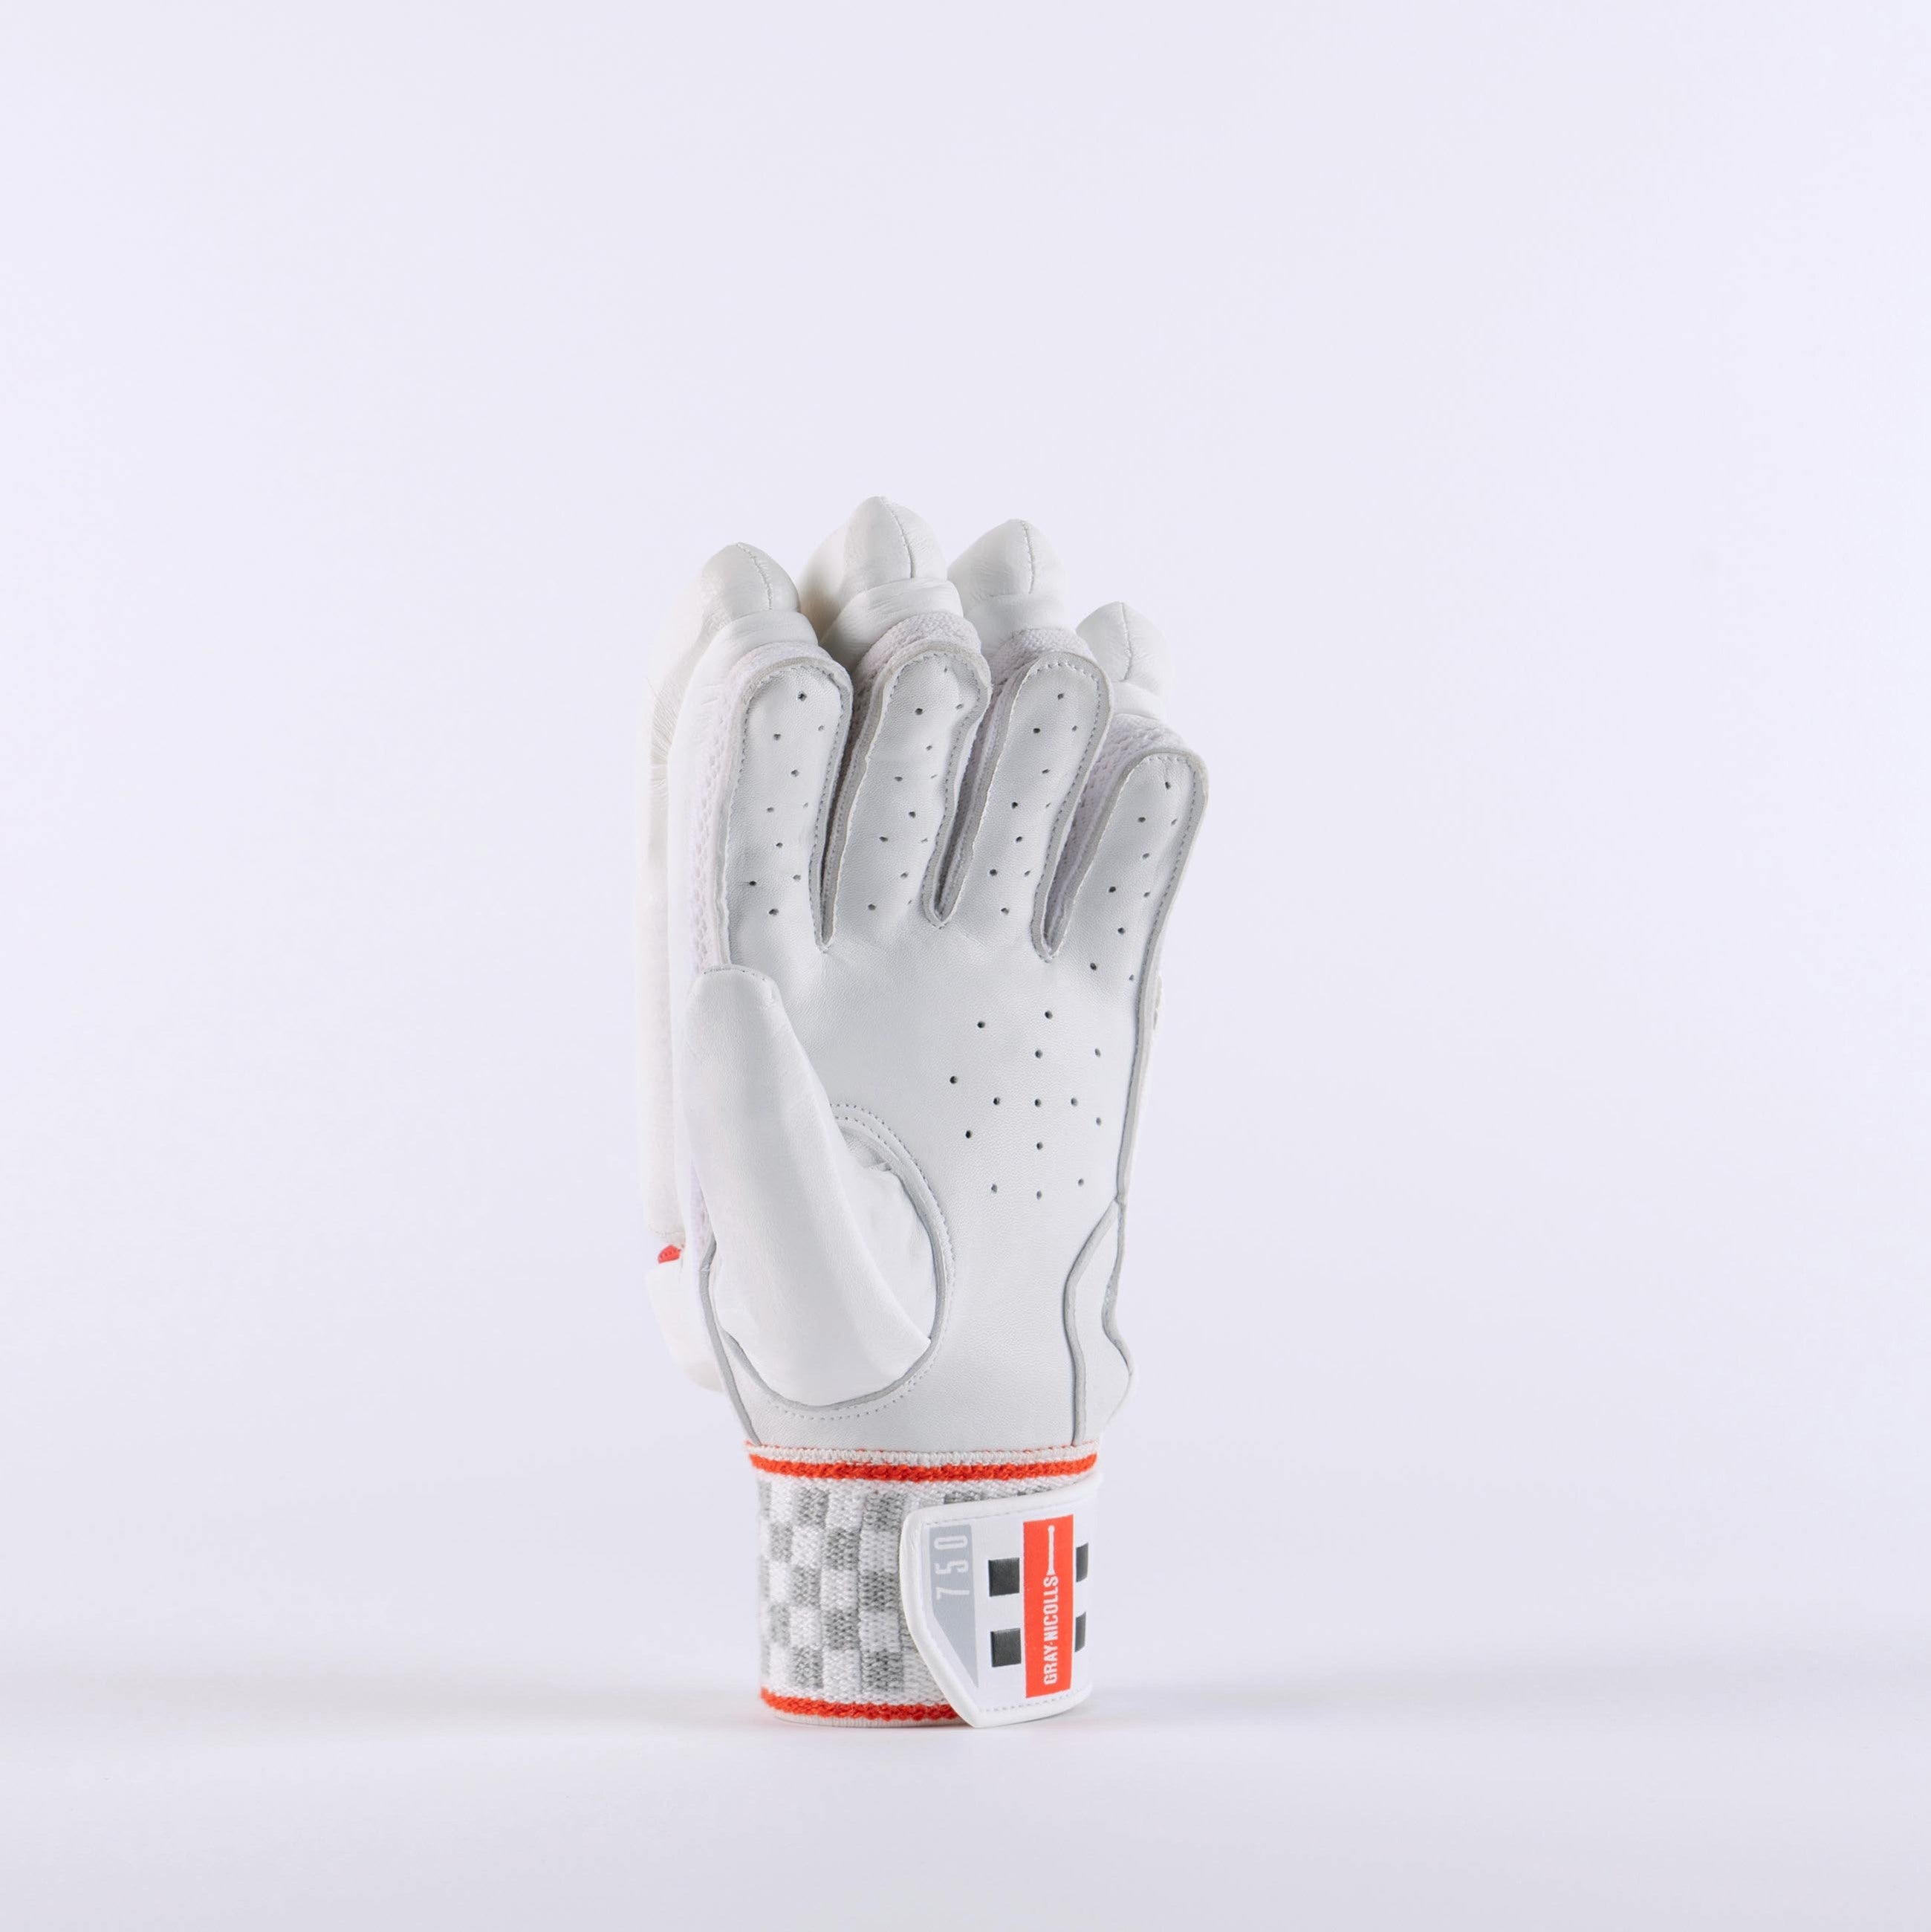 CGCB23Batting Gloves Test 750 Glove Top Hand, Palm